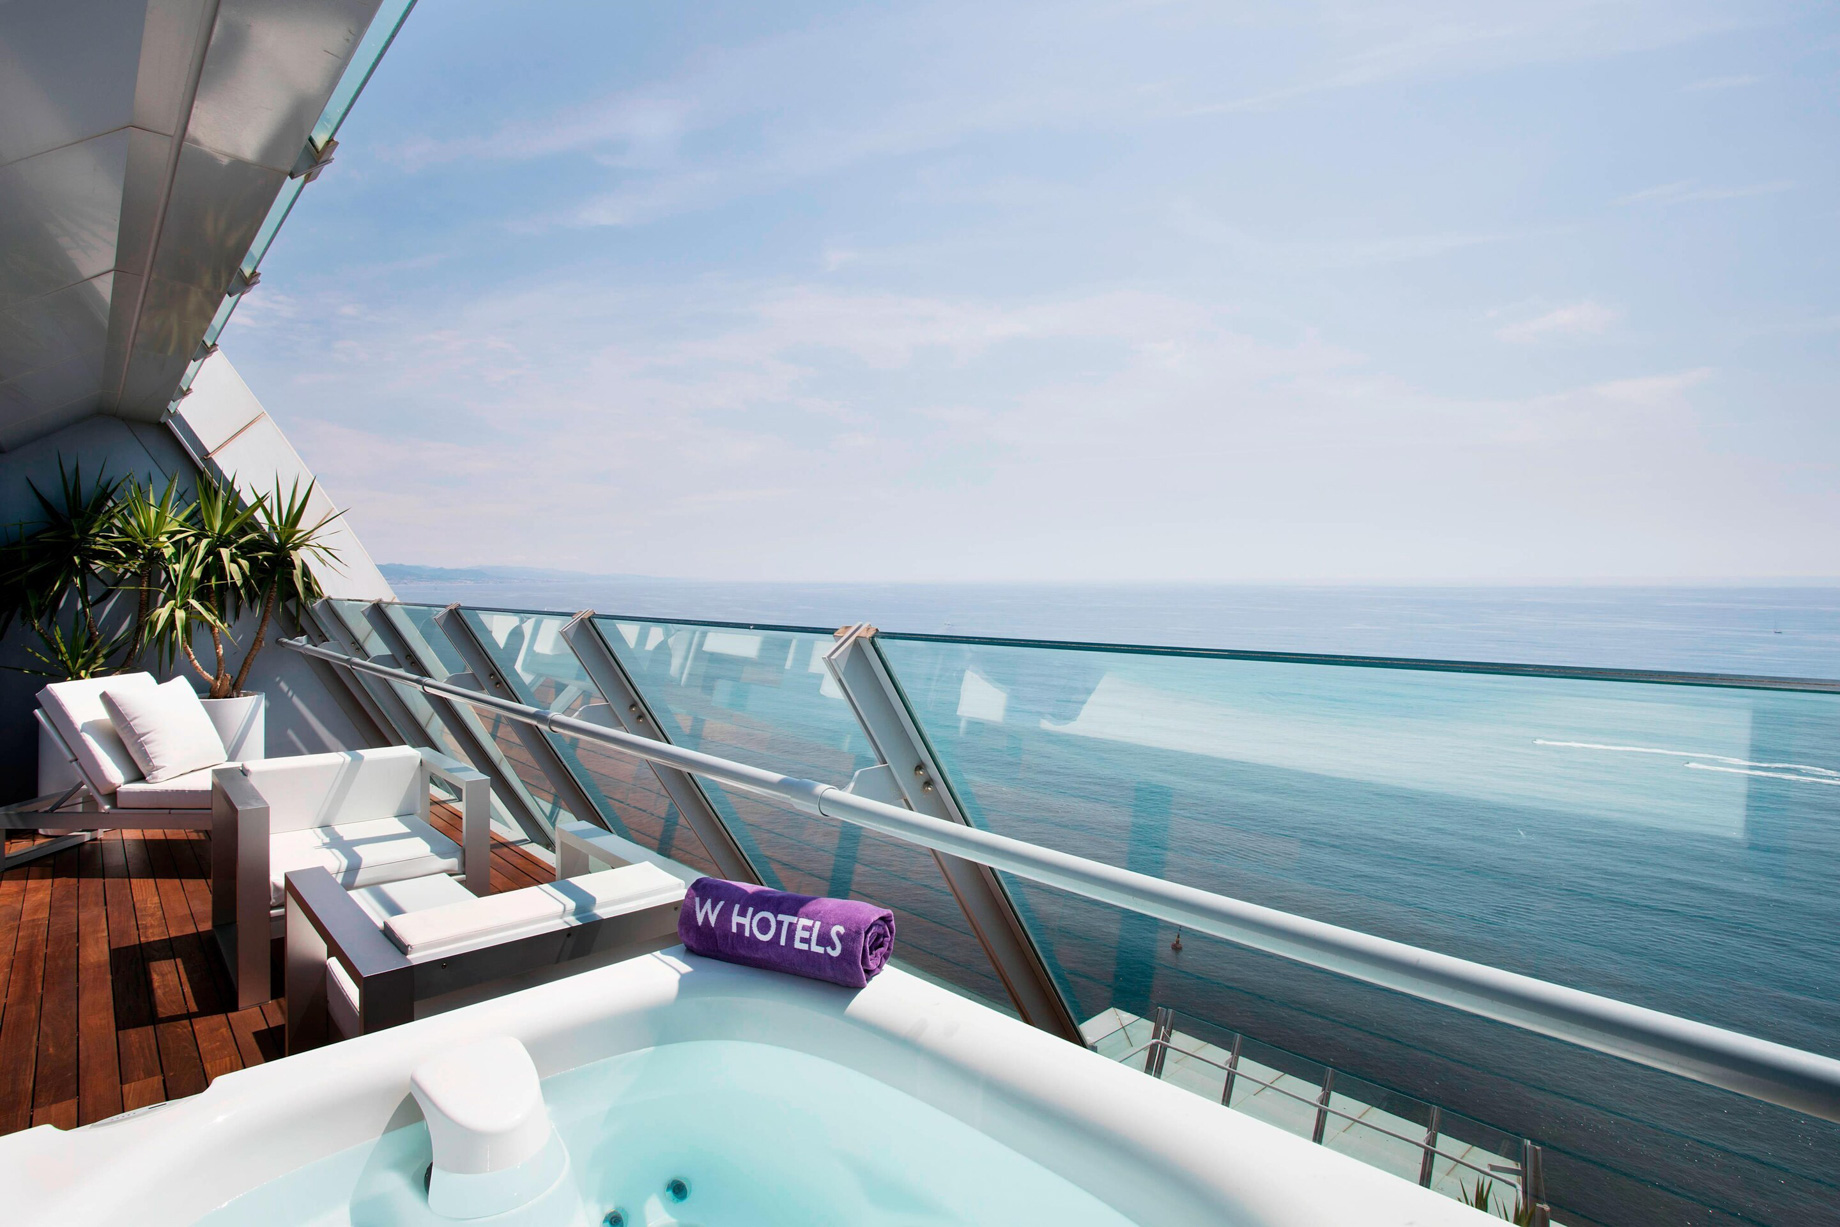 W Barcelona Hotel – Barcelona, Spain – Marvelous Suite Deck Ocean View